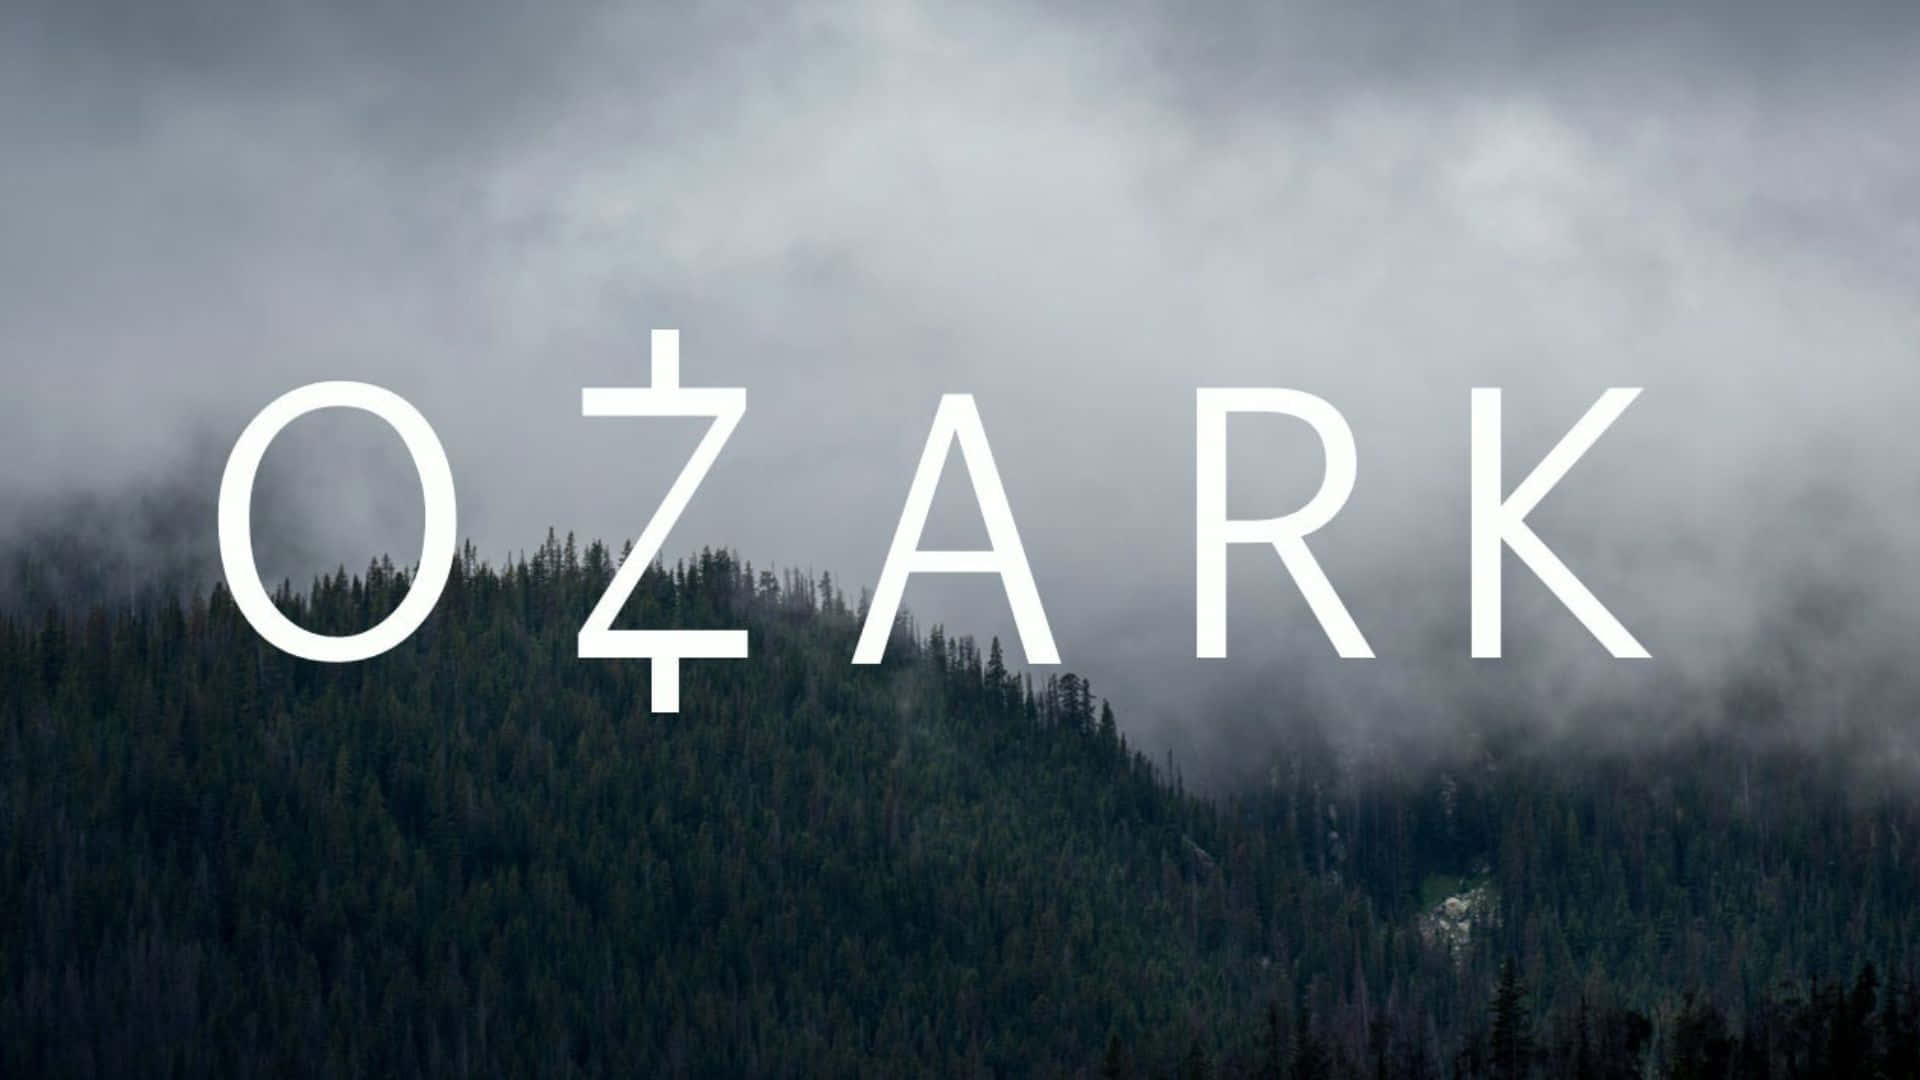 Ozark Series Title Over Forest Wallpaper